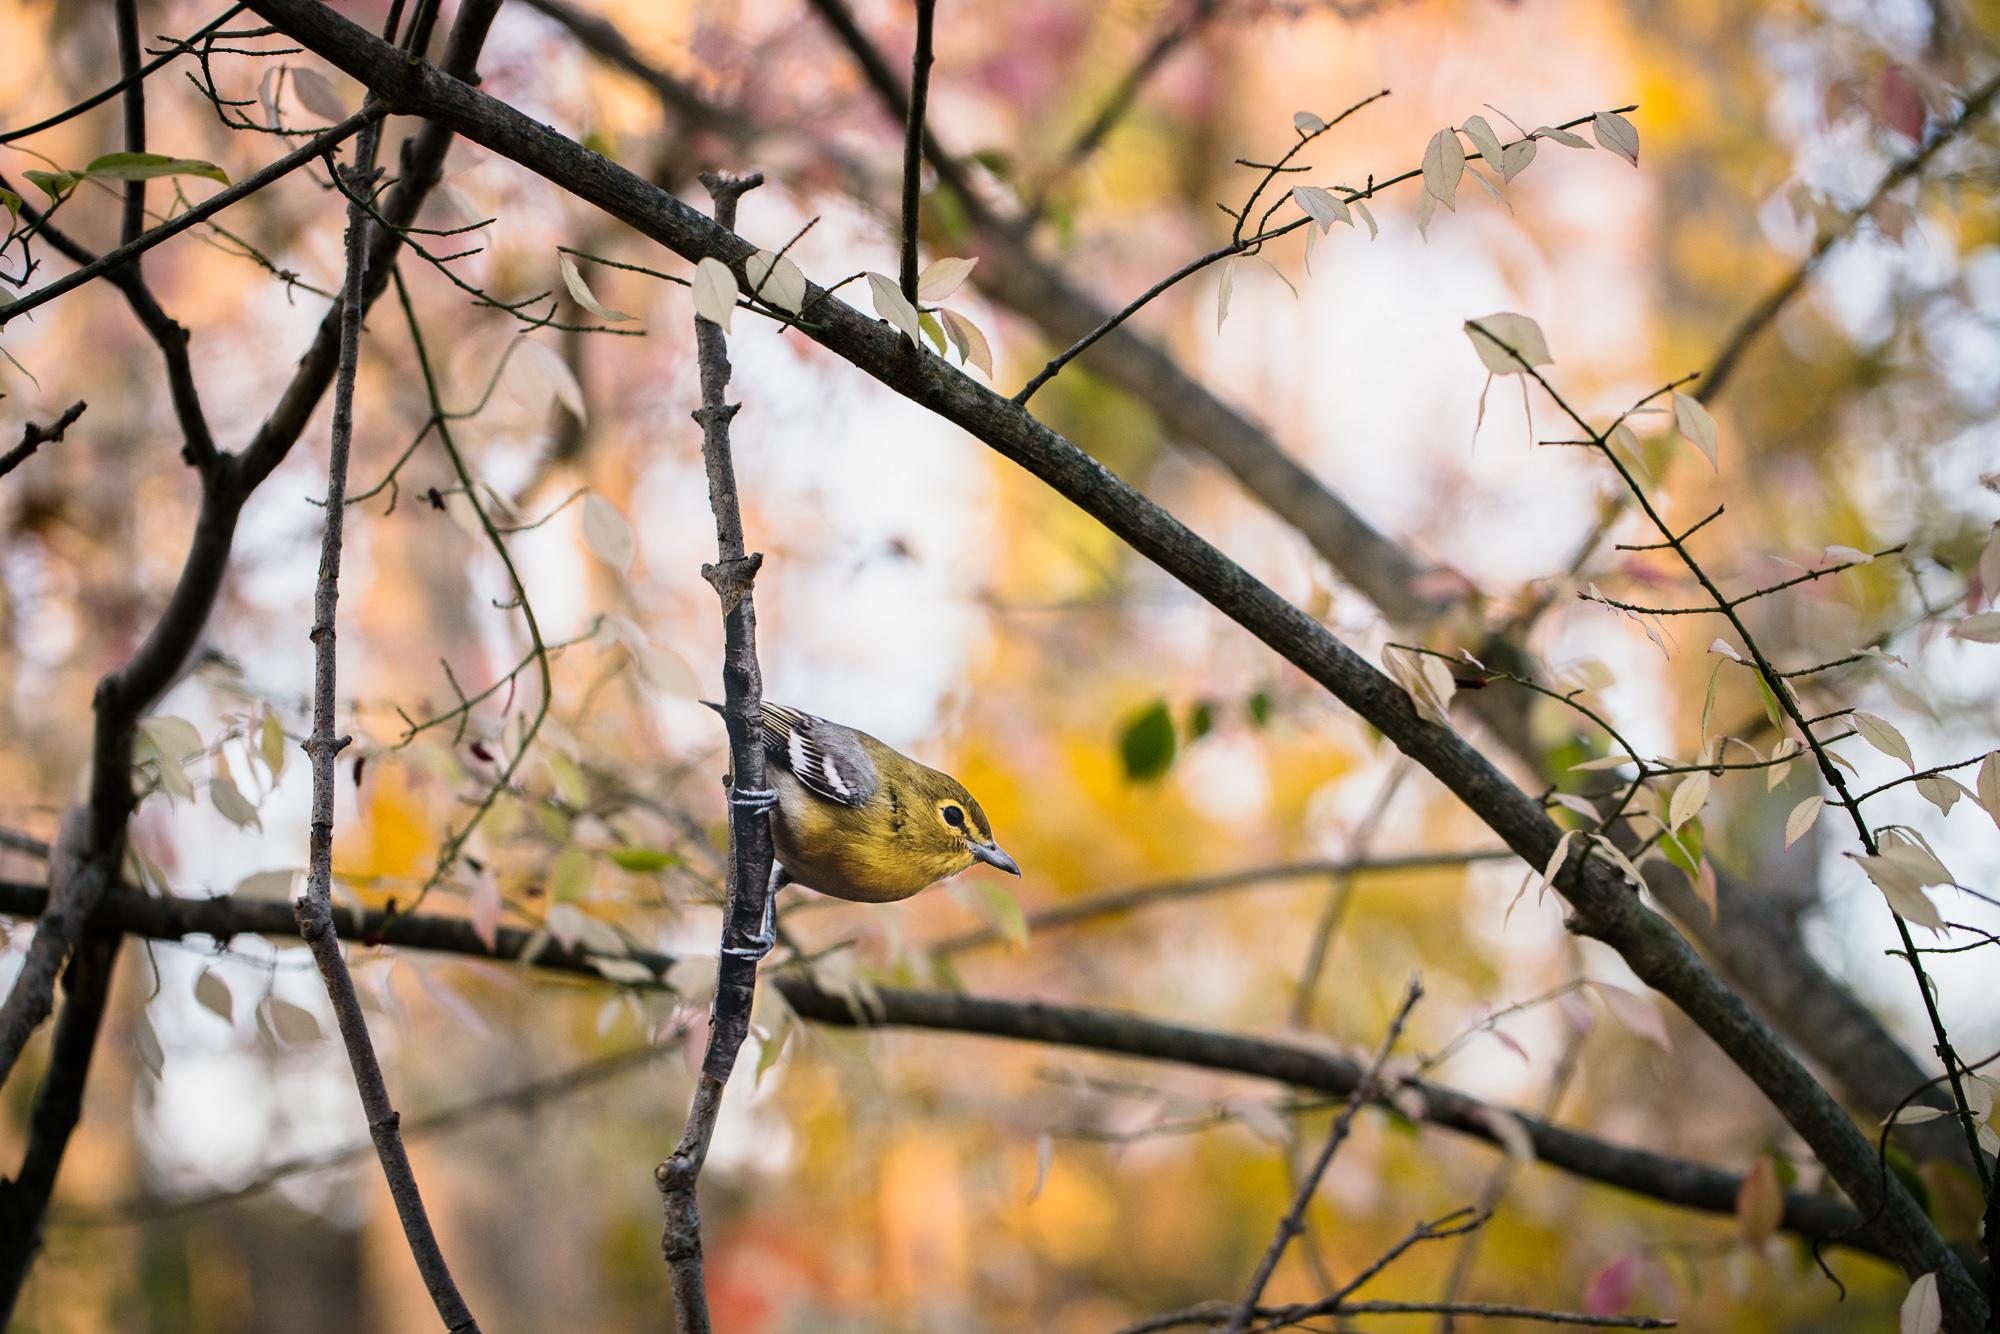 Carolyn Monastra Color Photograph - "Yellow-throated Vireo" - original bird photography by Matt Tillett